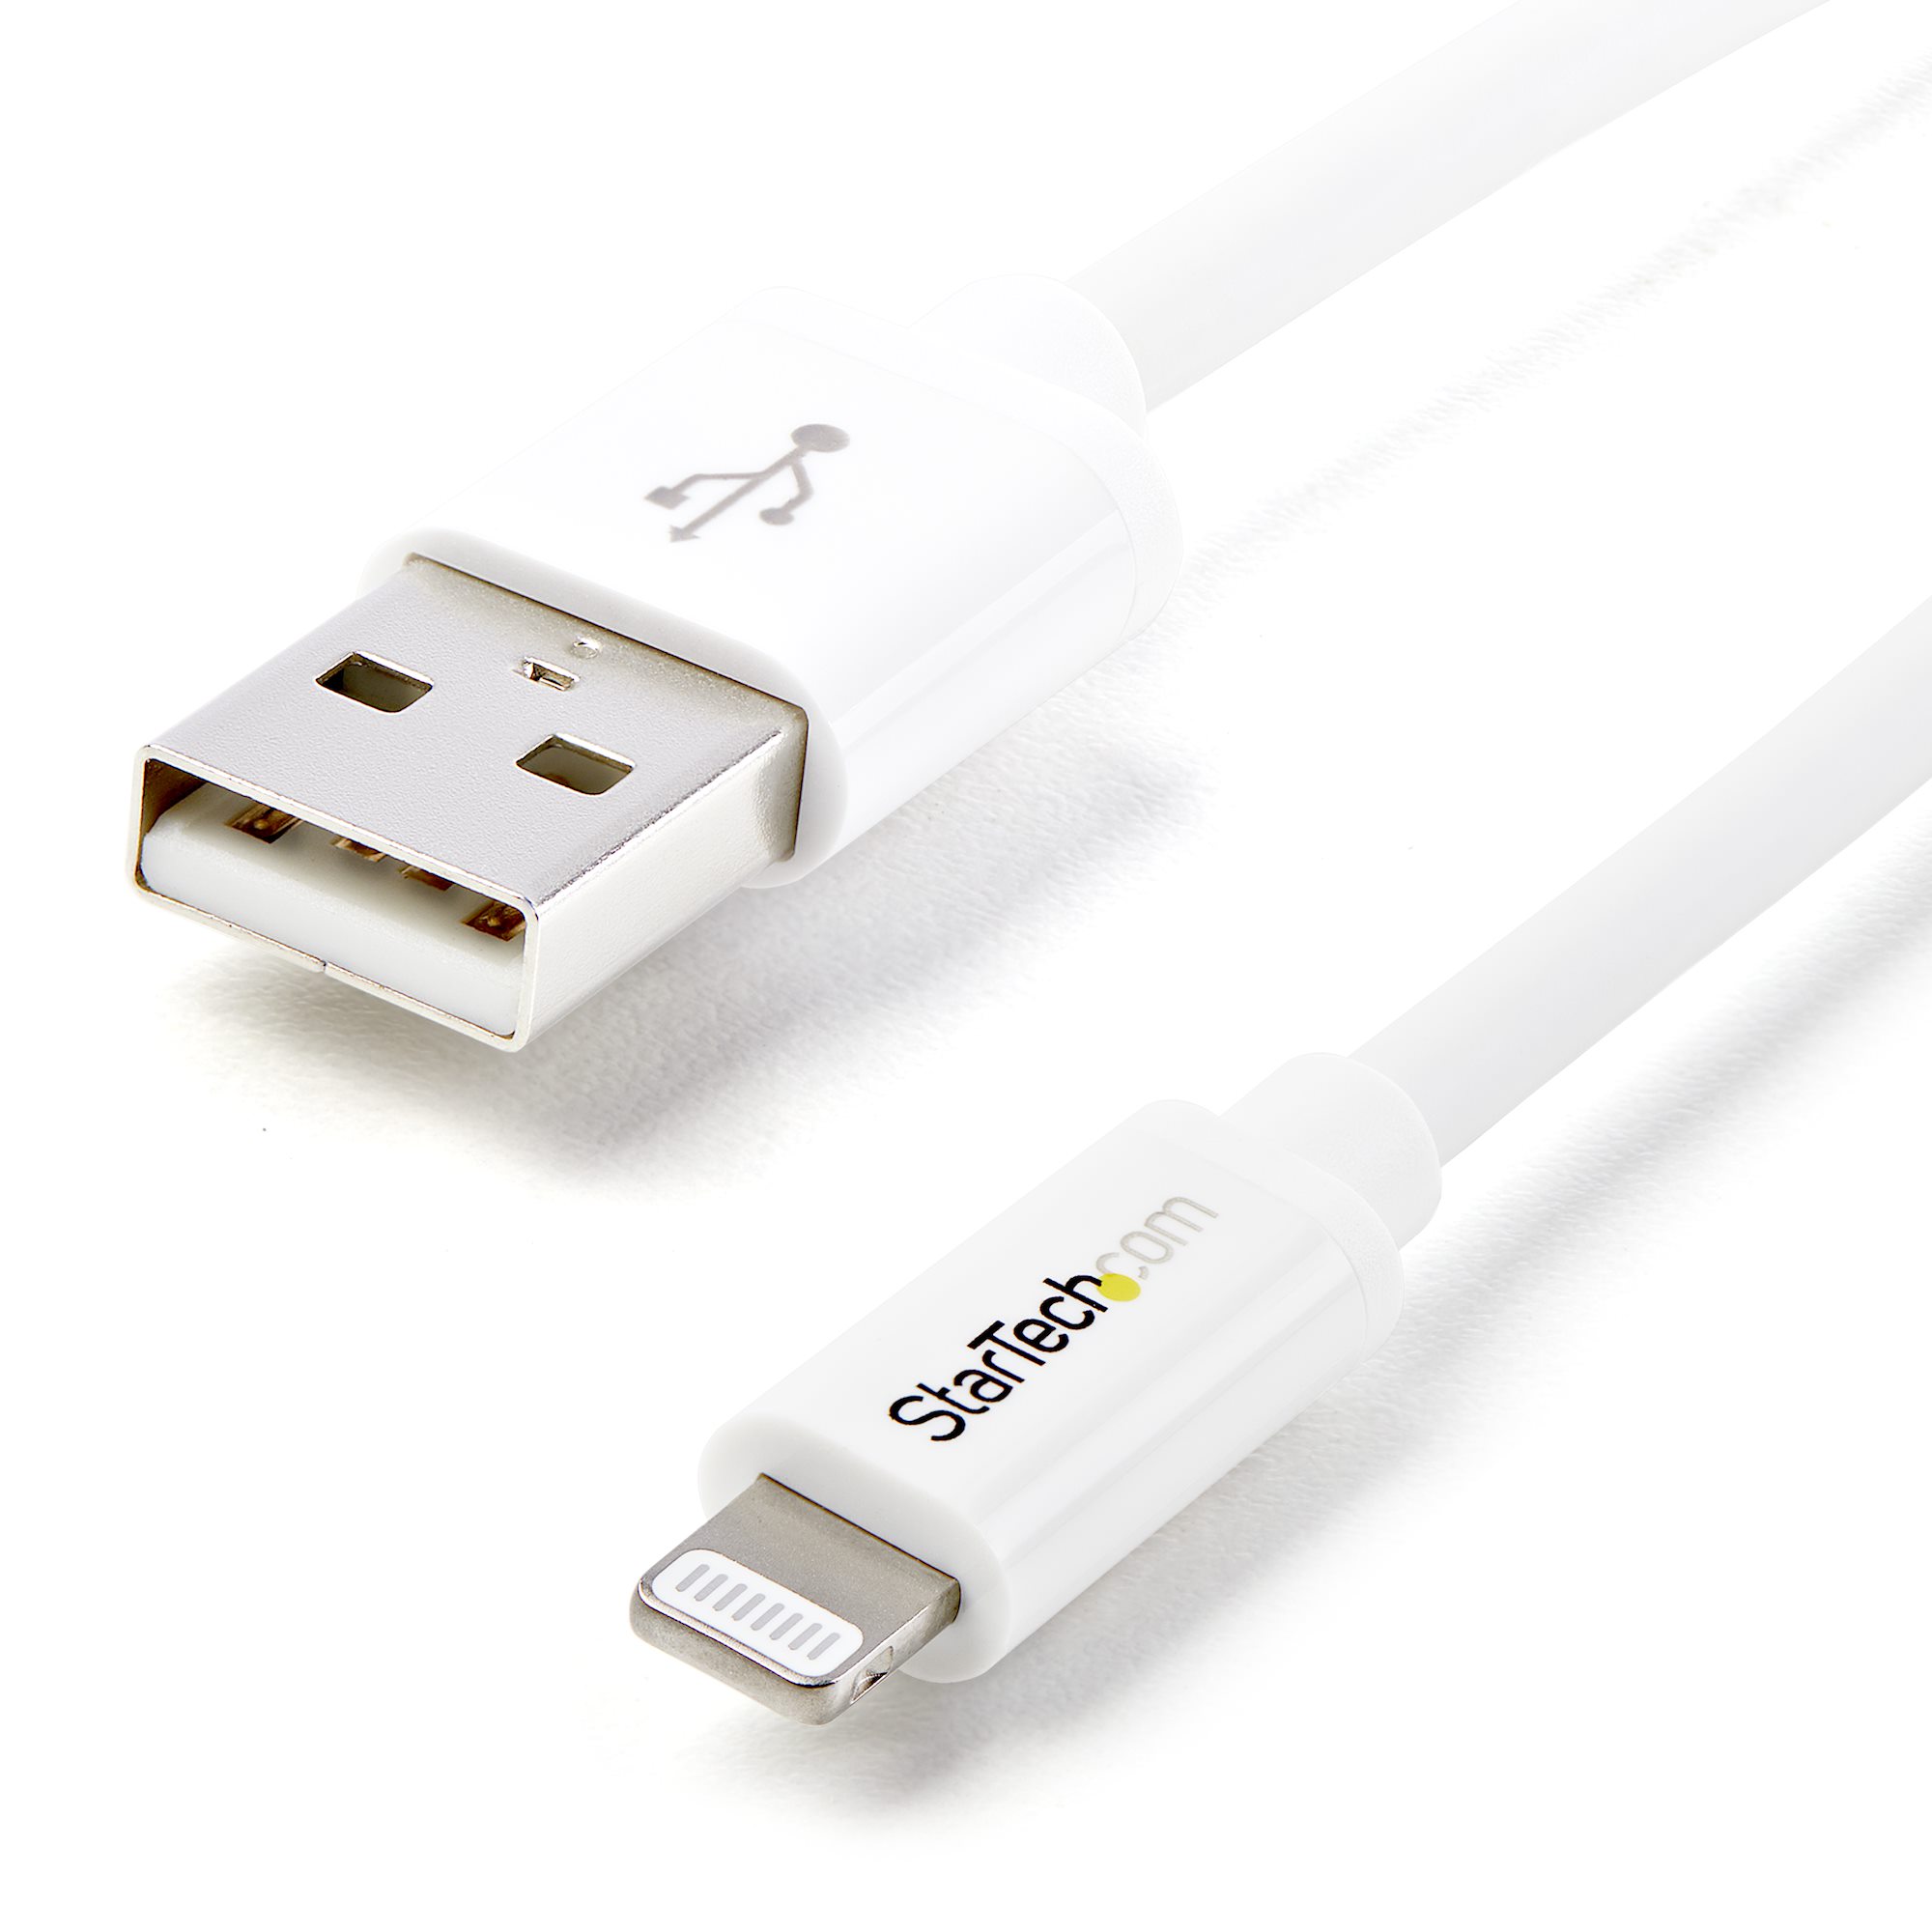 Versnellen evolutie Stimulans 2m White 8-pin Lightning to USB Cable - Lightning Cables | StarTech.com